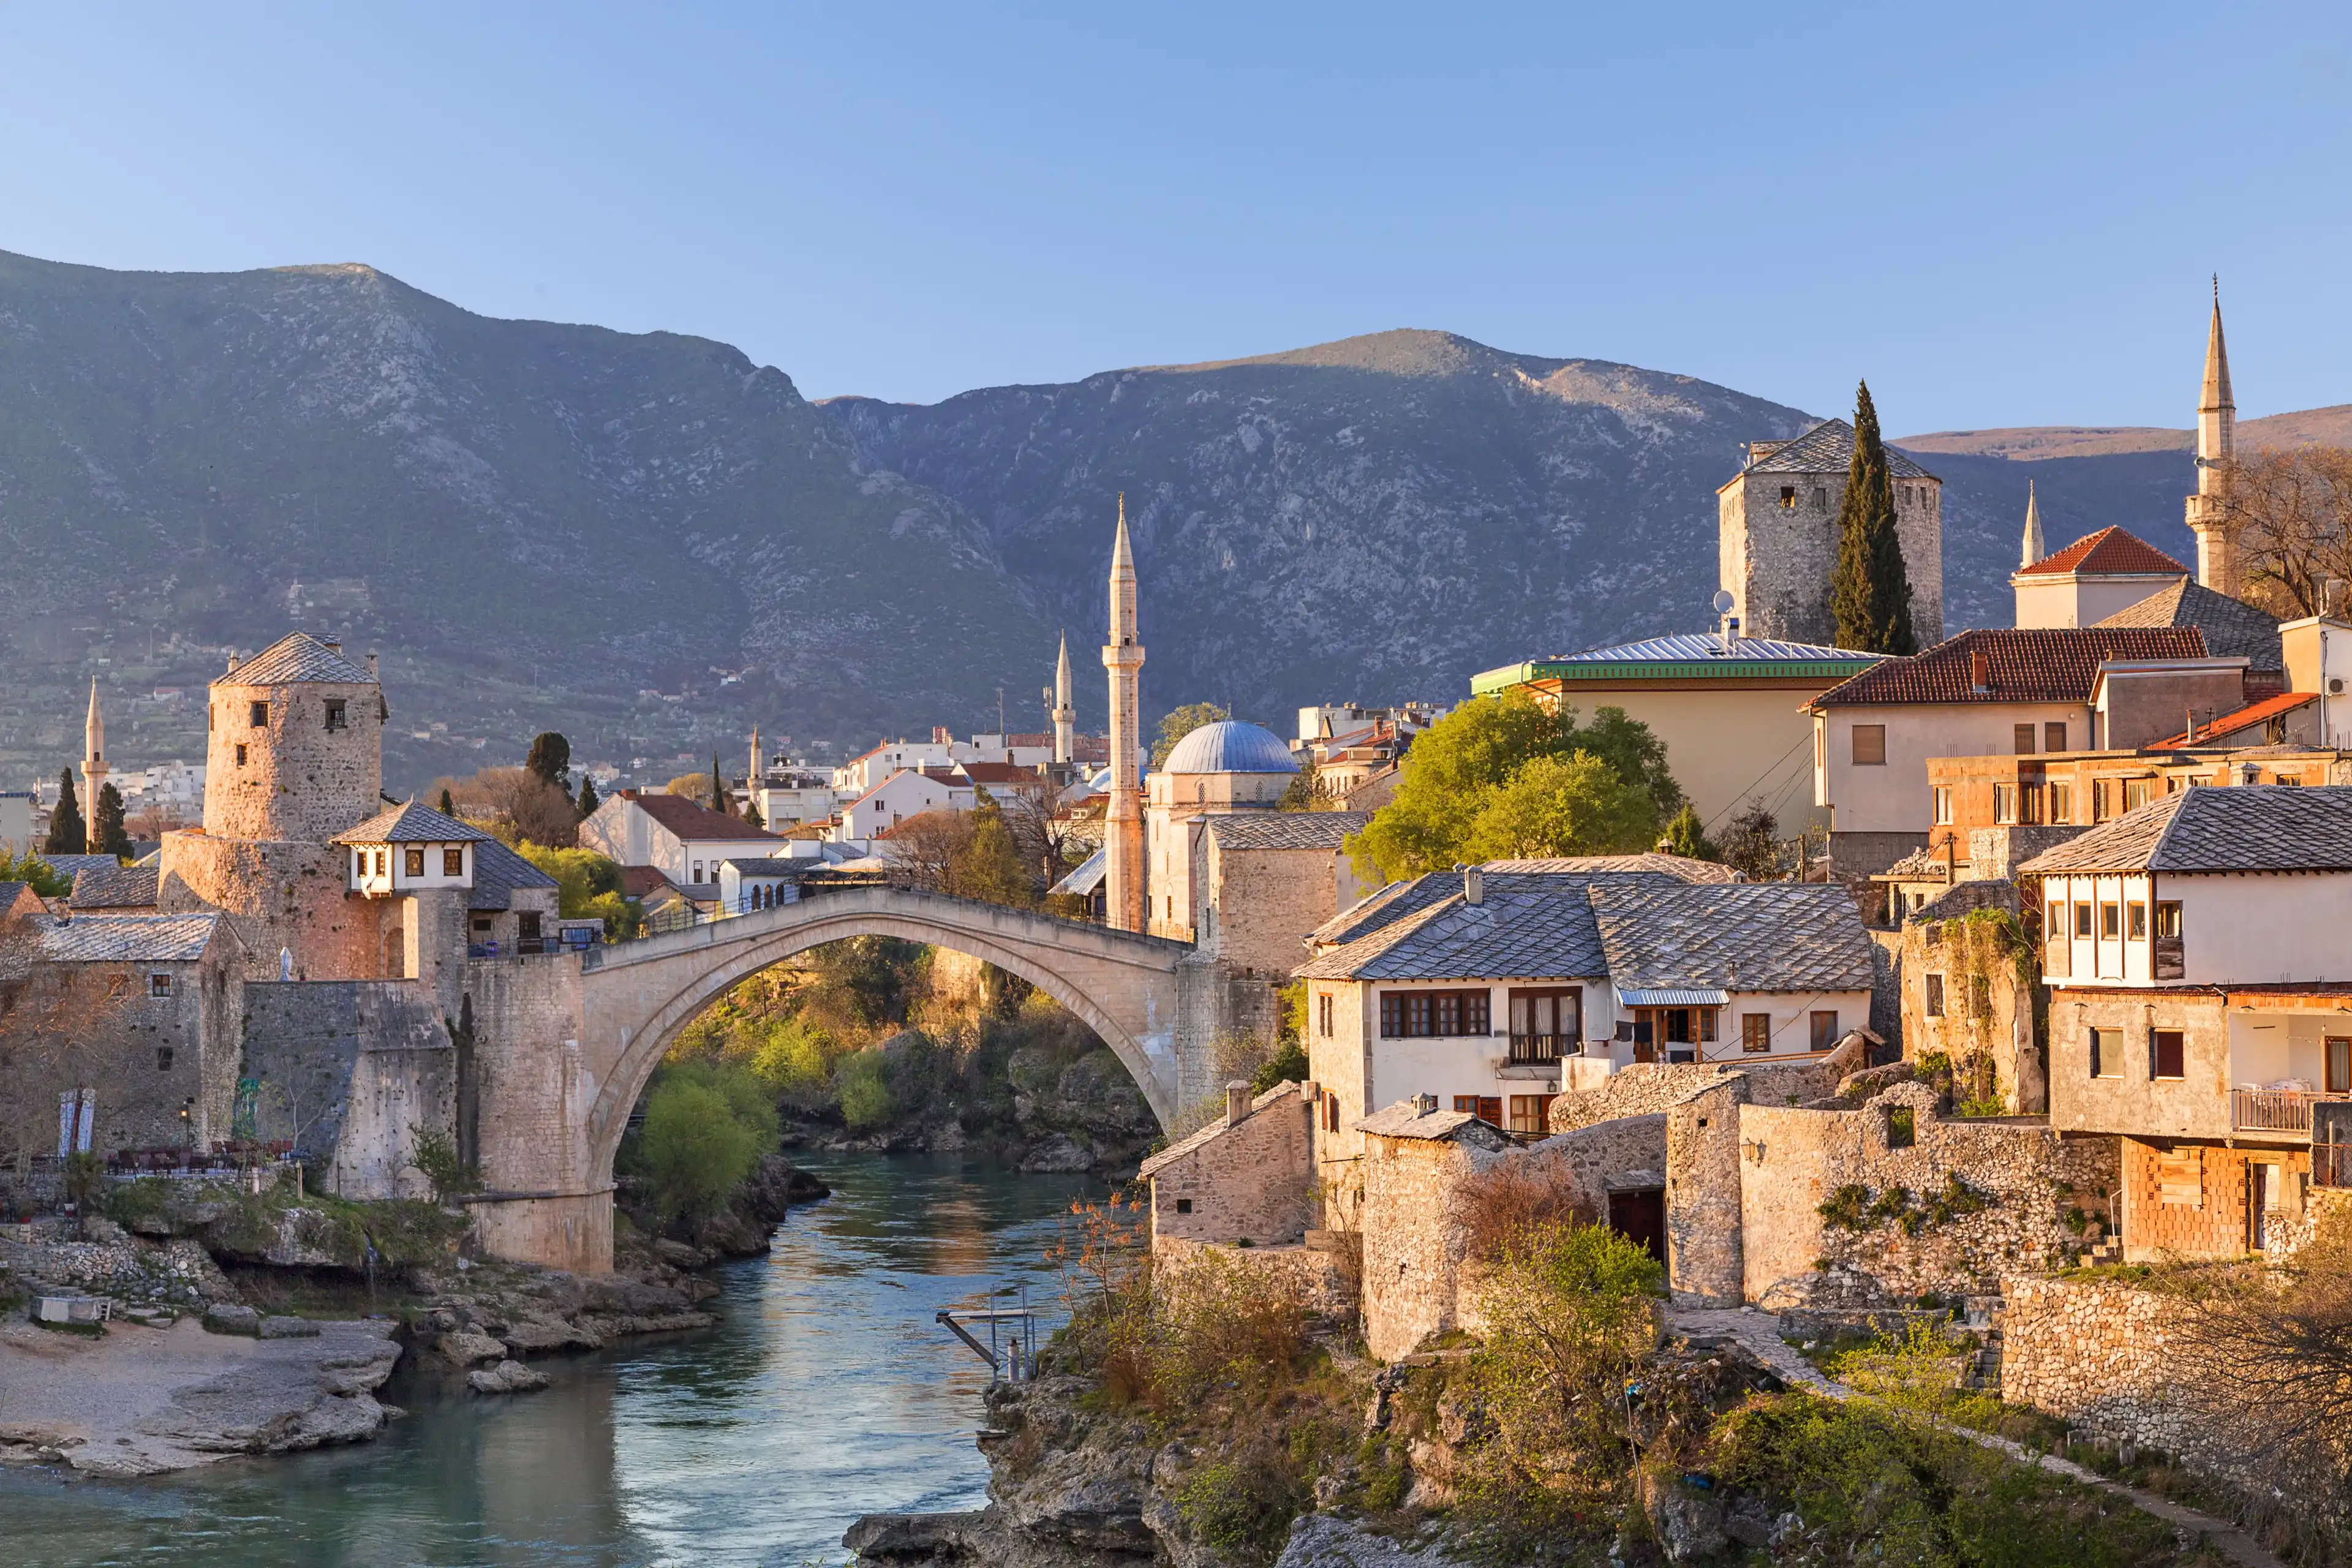 Best Mostar hotels. Cheap hotels in Mostar, Bosnia and Herzegovina